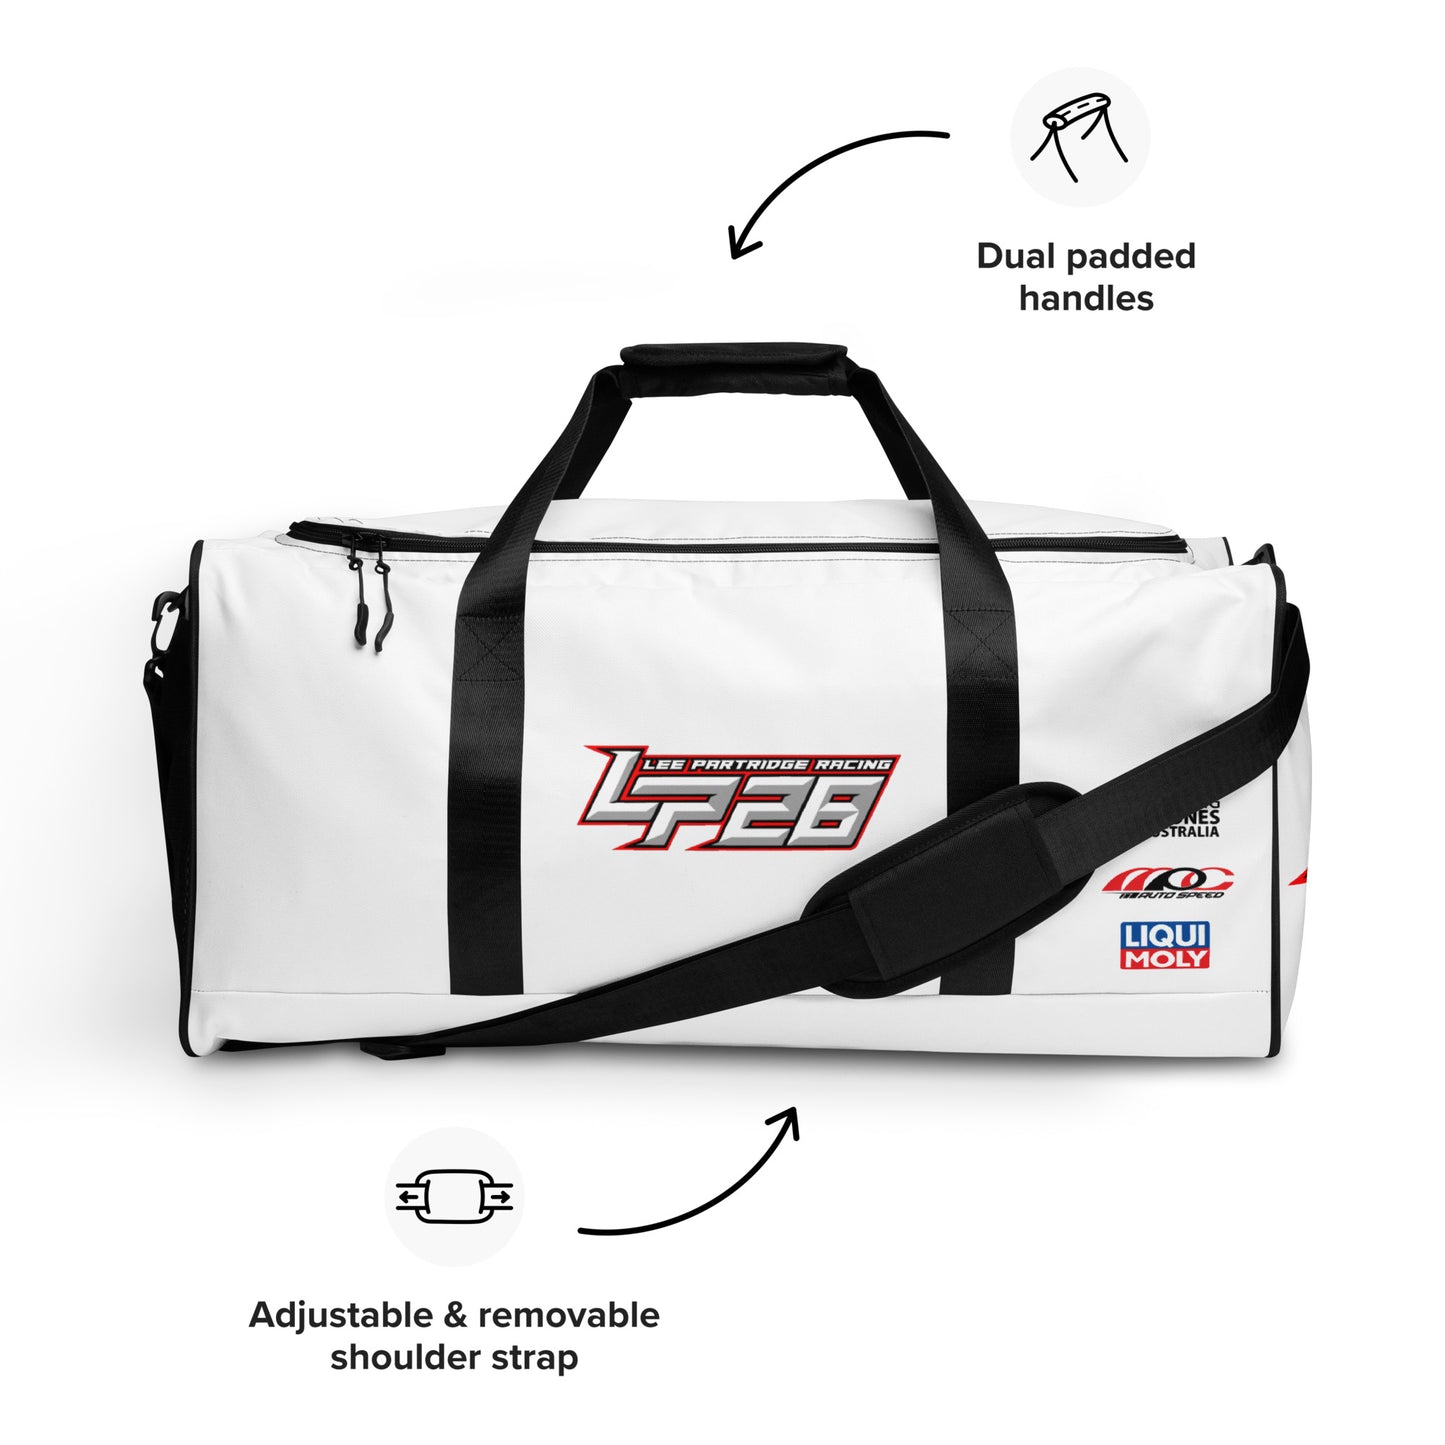 LEE PARTRIDGE RACING Duffle bag - with logos / white